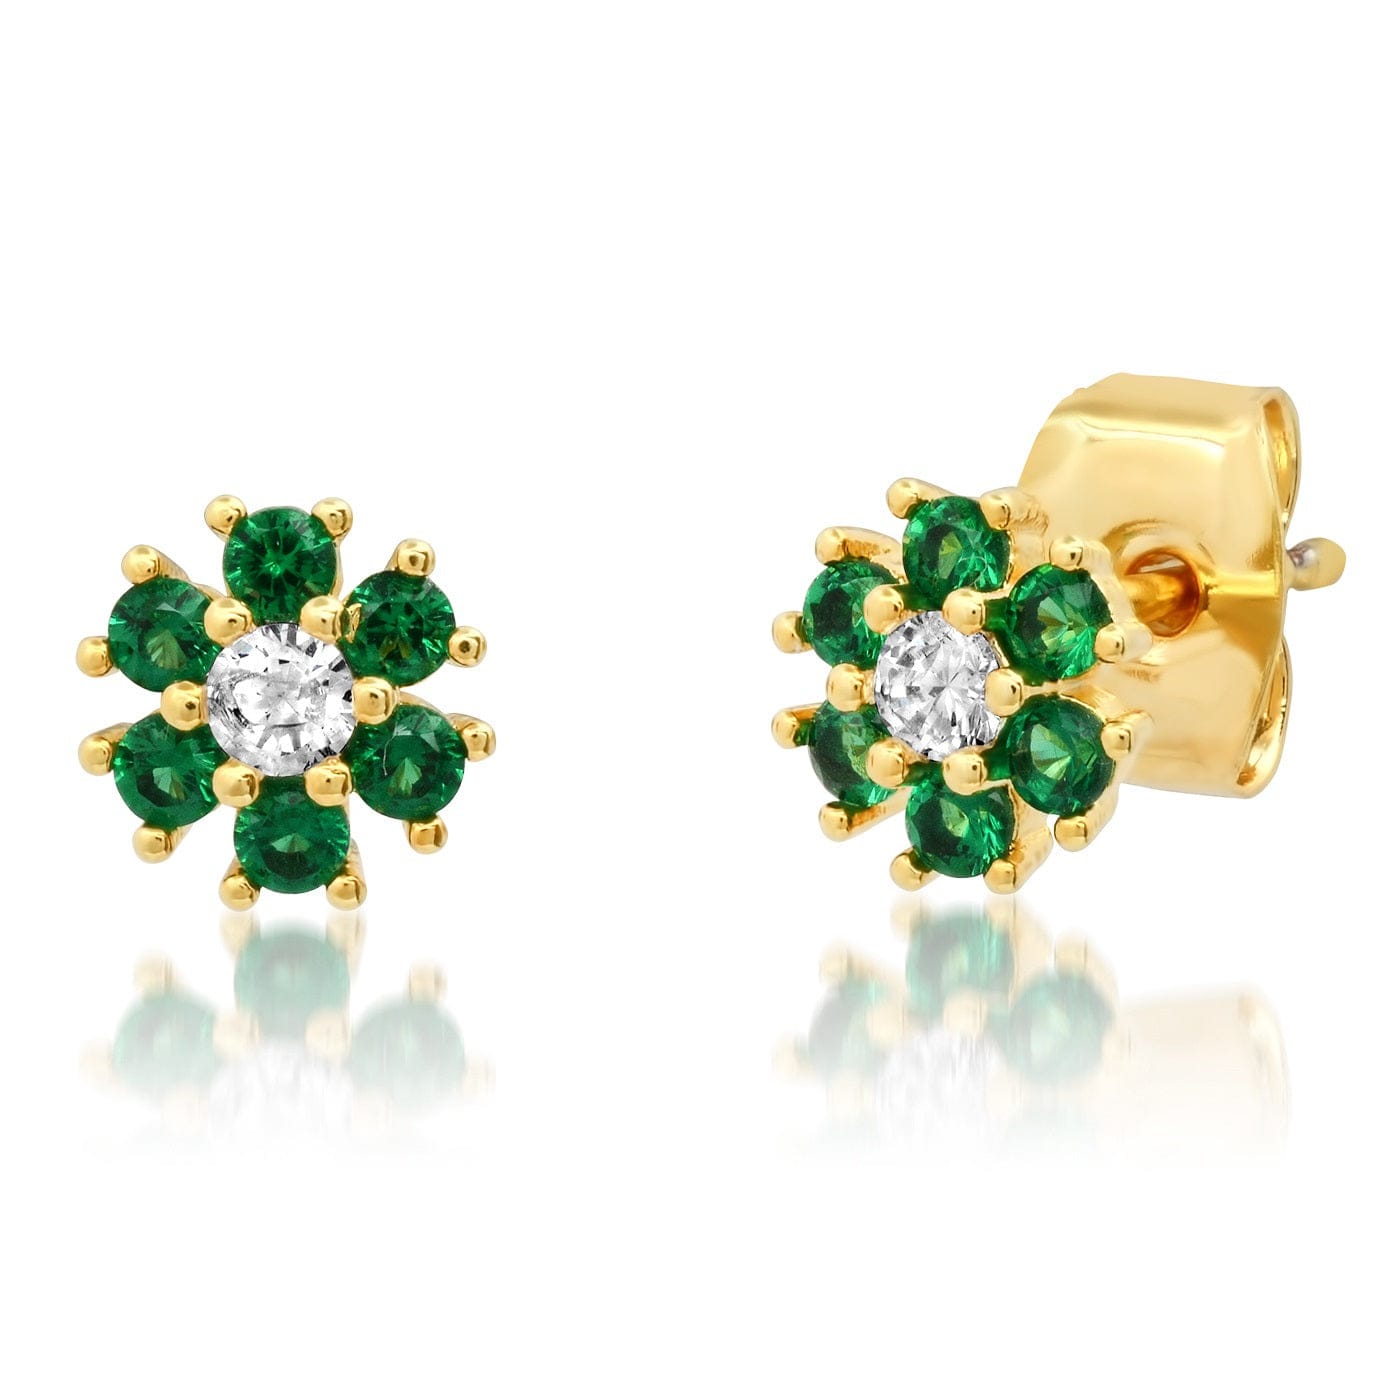 TAI JEWELRY Earrings Green CZ Flower Stud With Jewel Tone Center Stone